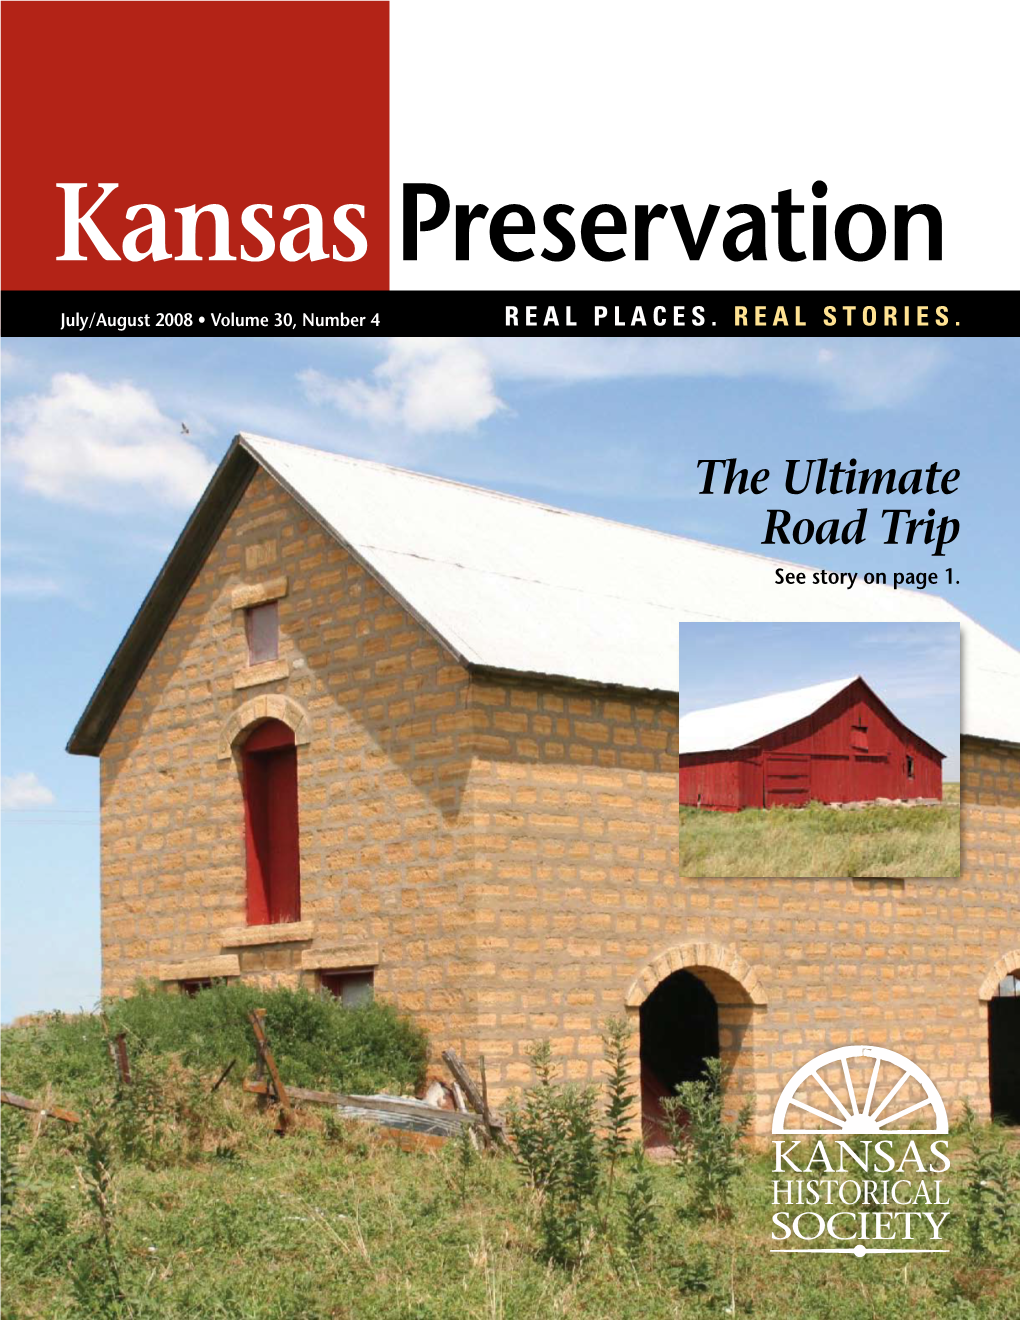 Kansas Preservation